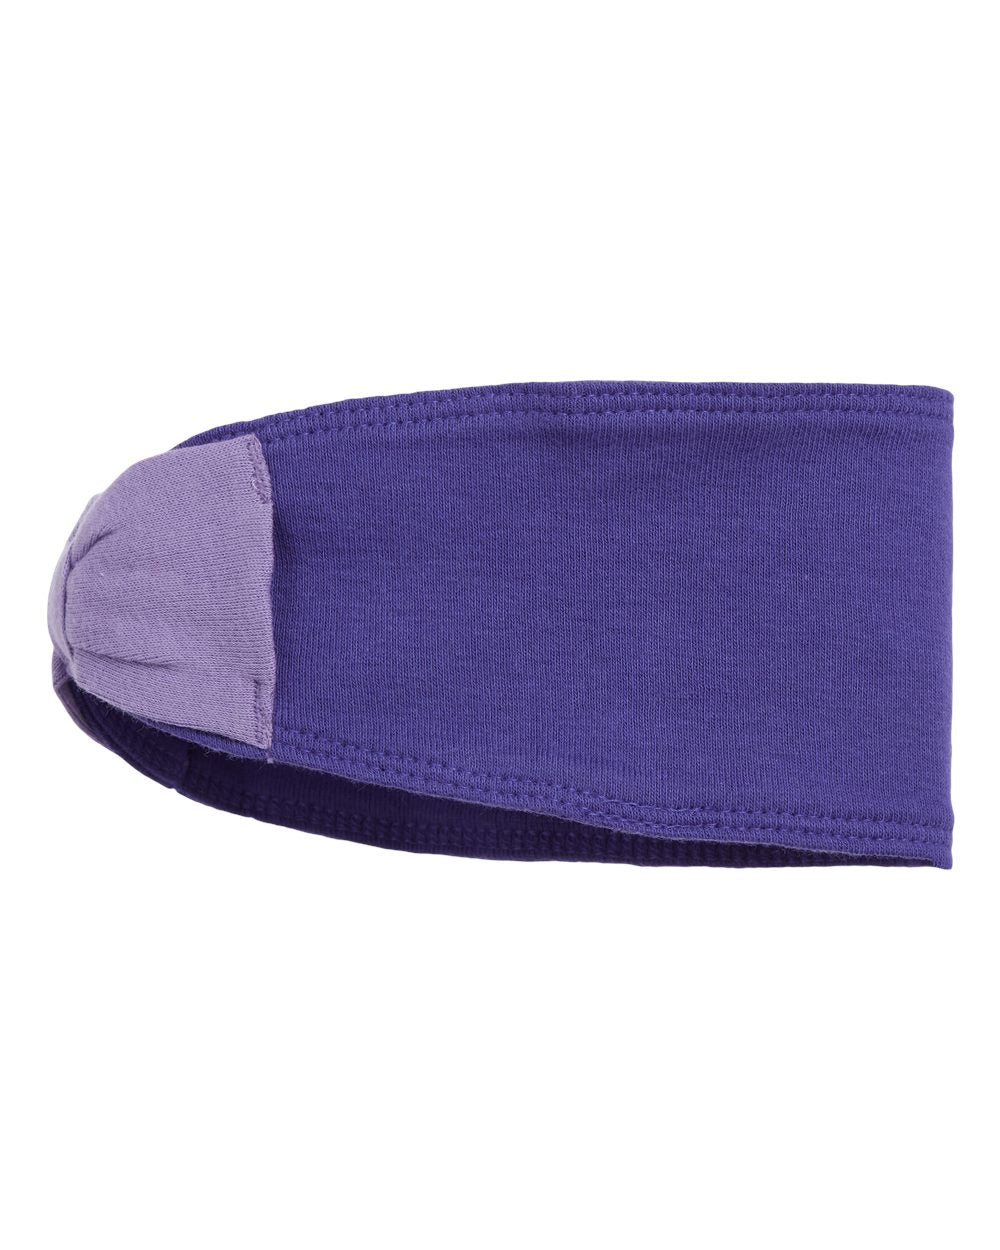 Baby Headband with Bow Tie, (Purple - Lavender)